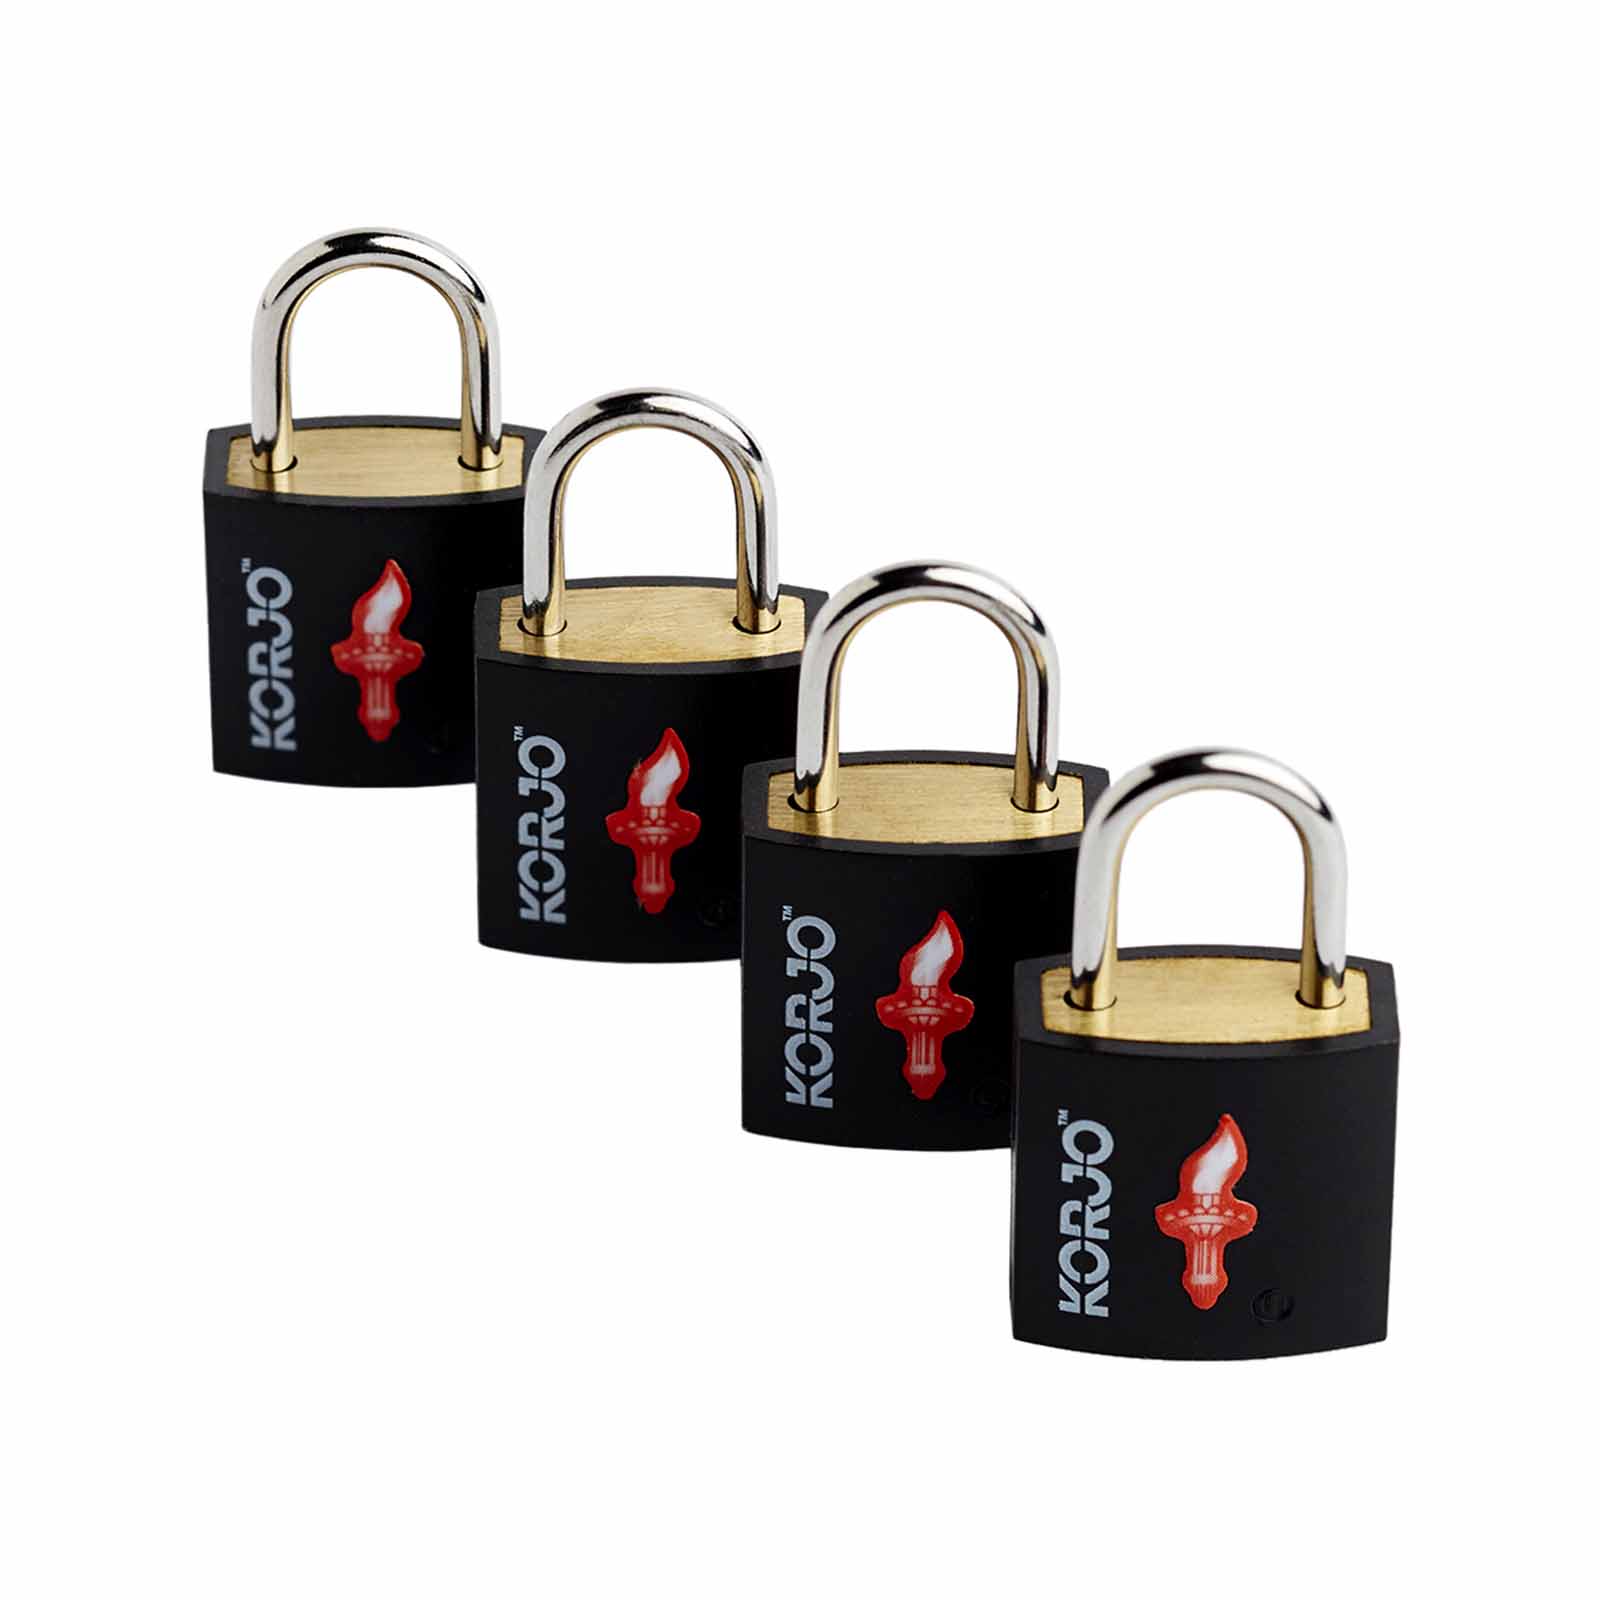 Korjo-Tsa-Keyed-Locks-Four-Pack-Black-Front